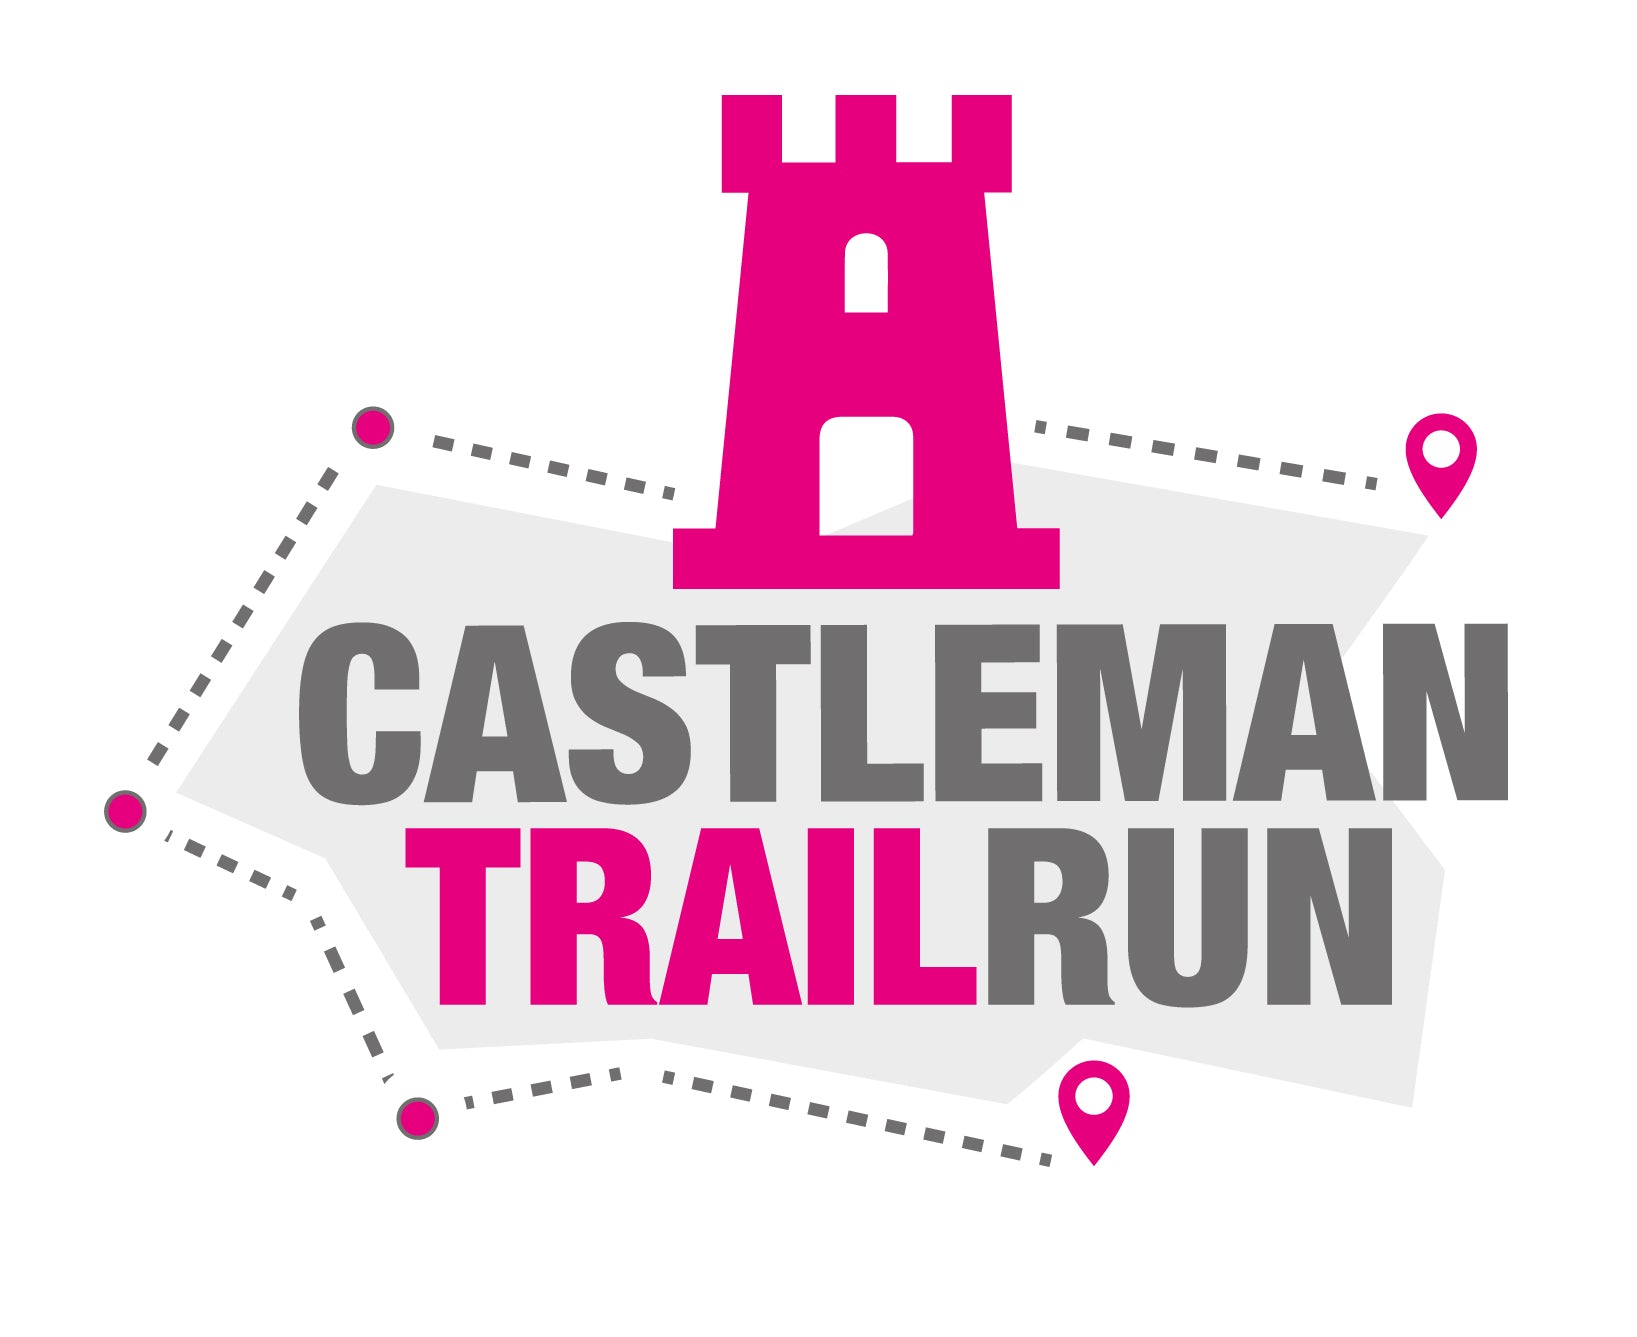 Trax-Ereignisse. Castleman-Trailrun. 25km